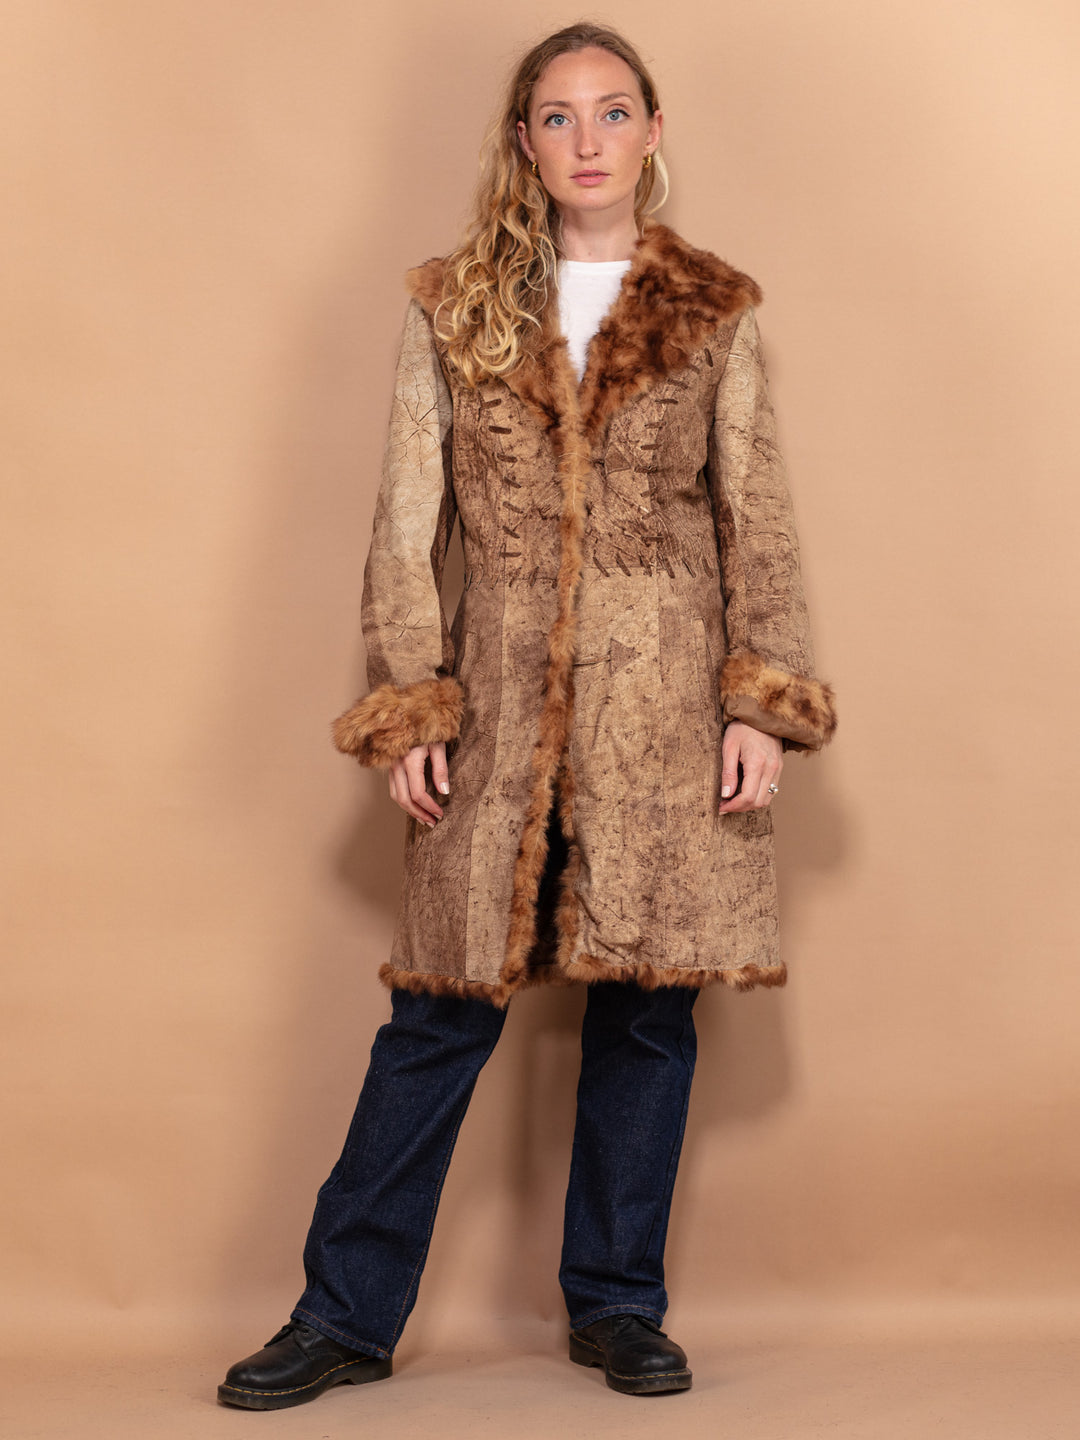 Penny Lane Fur Coat, Size Small S Brown Fur Coat, 90s Luxurious Coat, Retro Fur Overcoat, Glamour Fur Coat, Retro Suede Coat, Pre Loved Coat